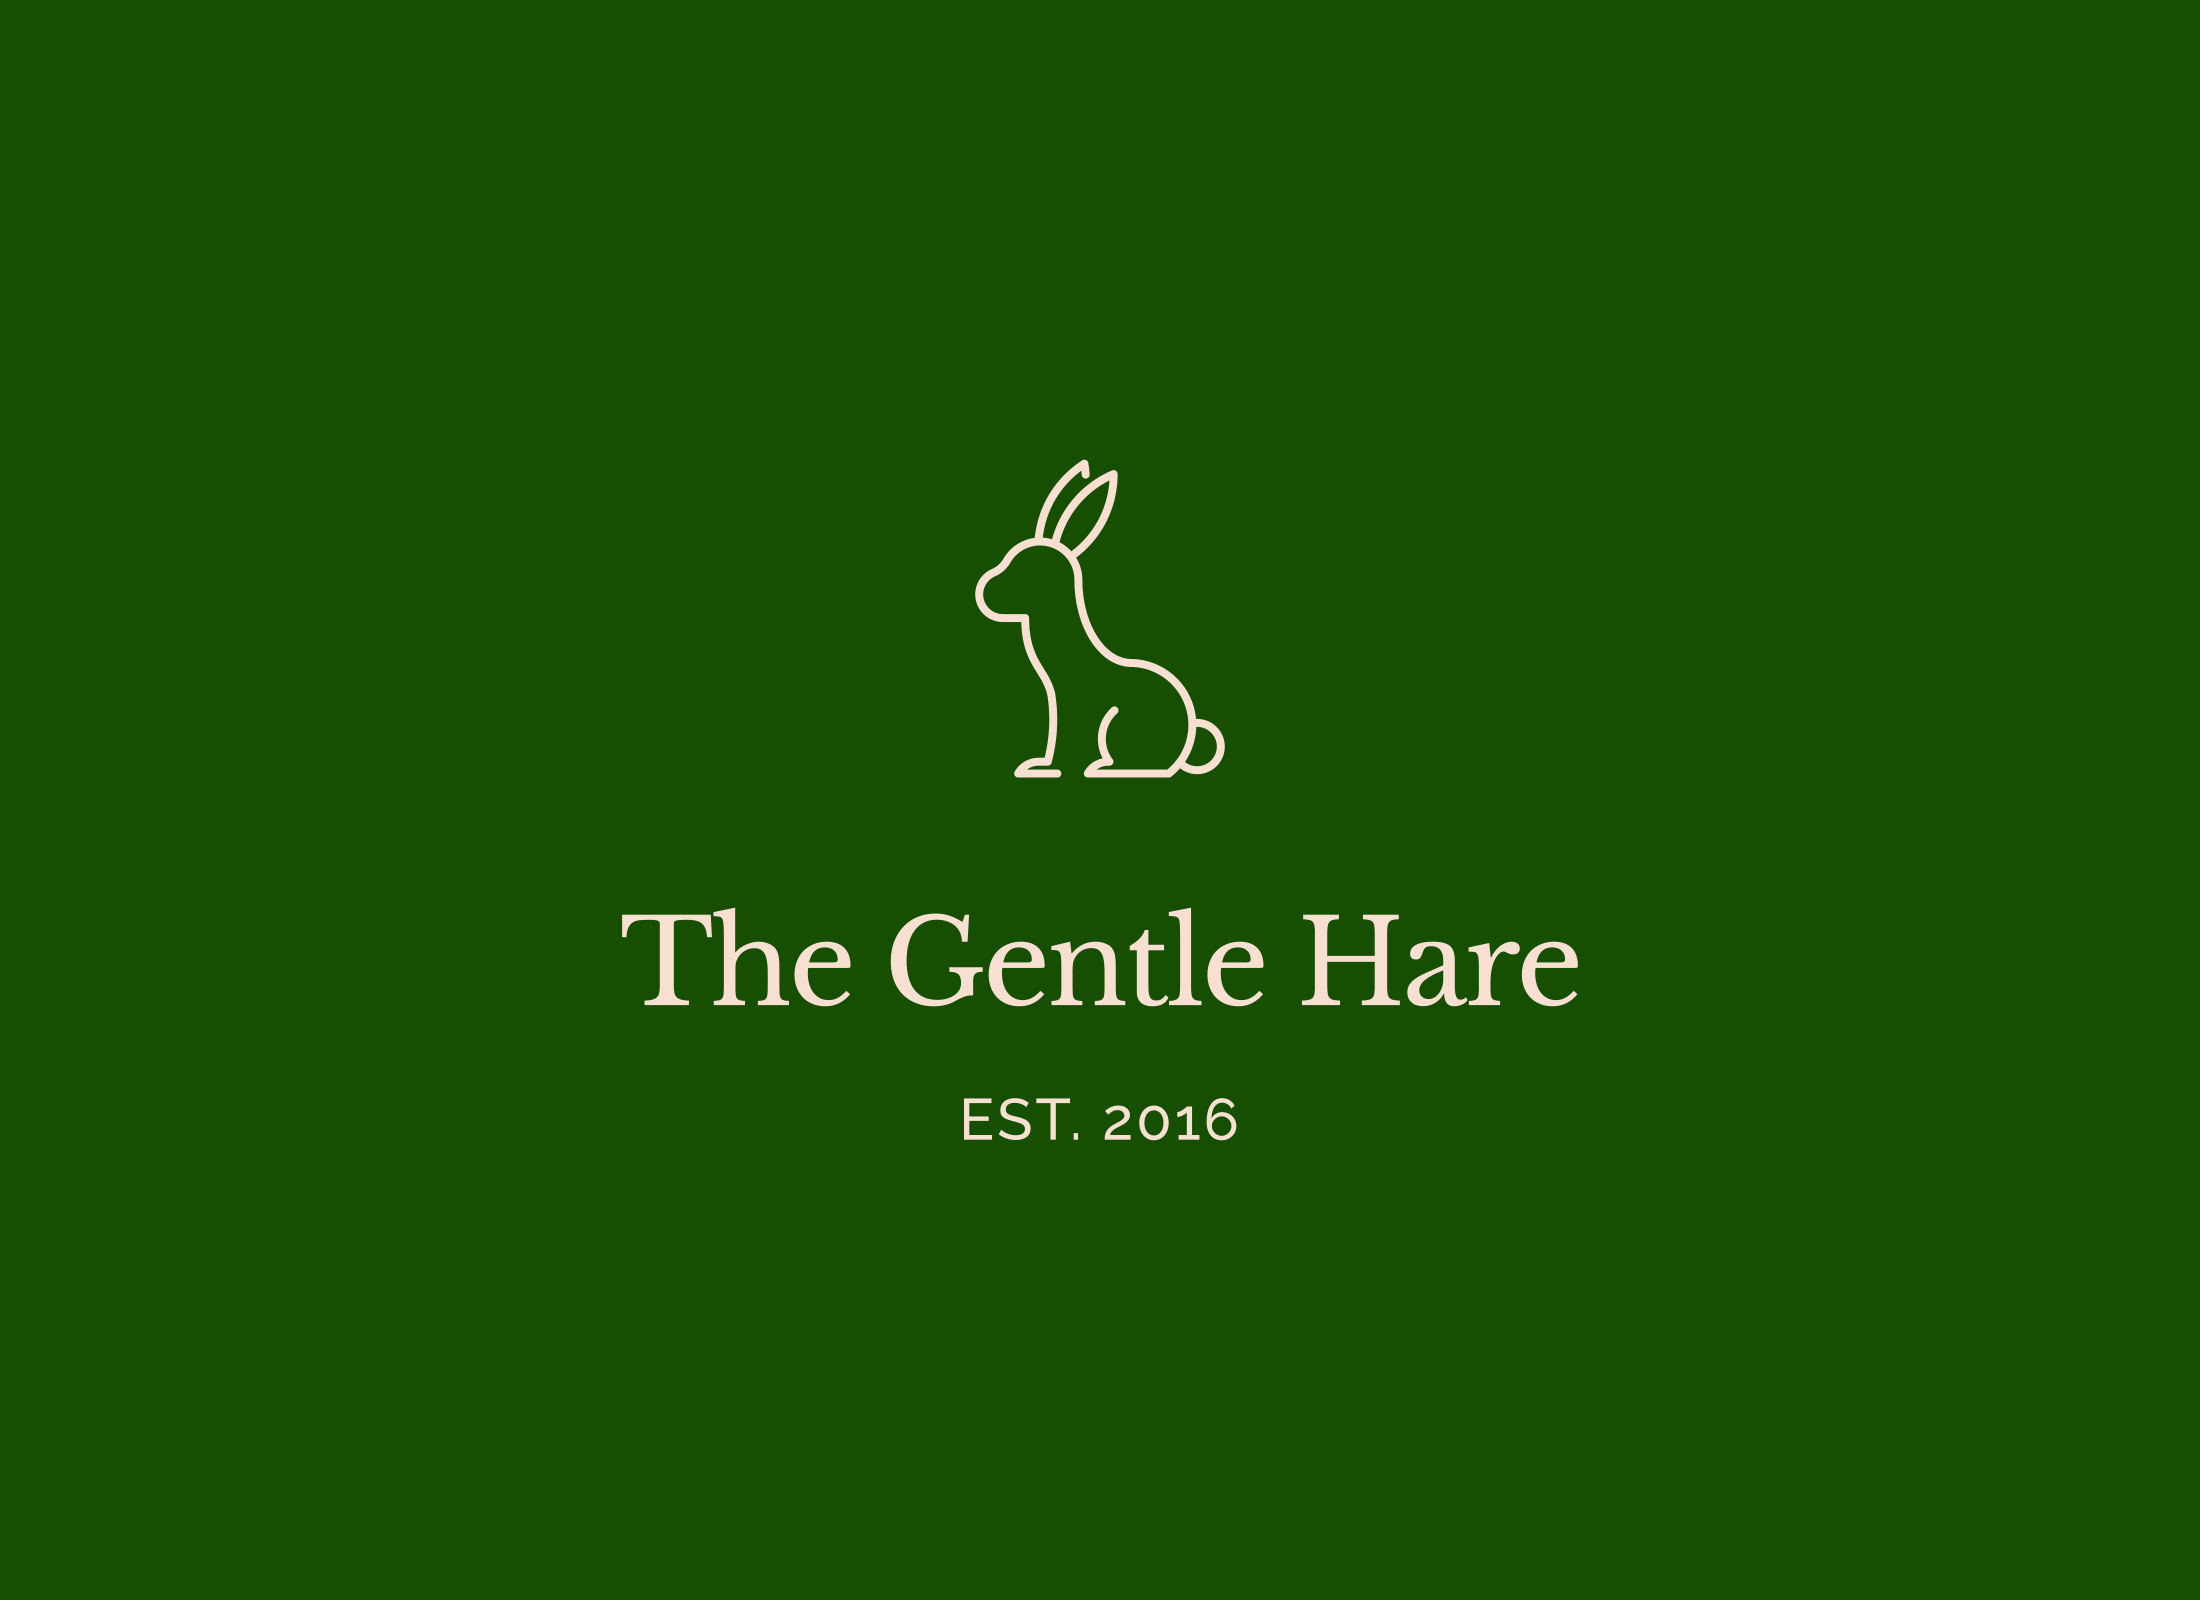 The Gentle Hare Brand Identity 1